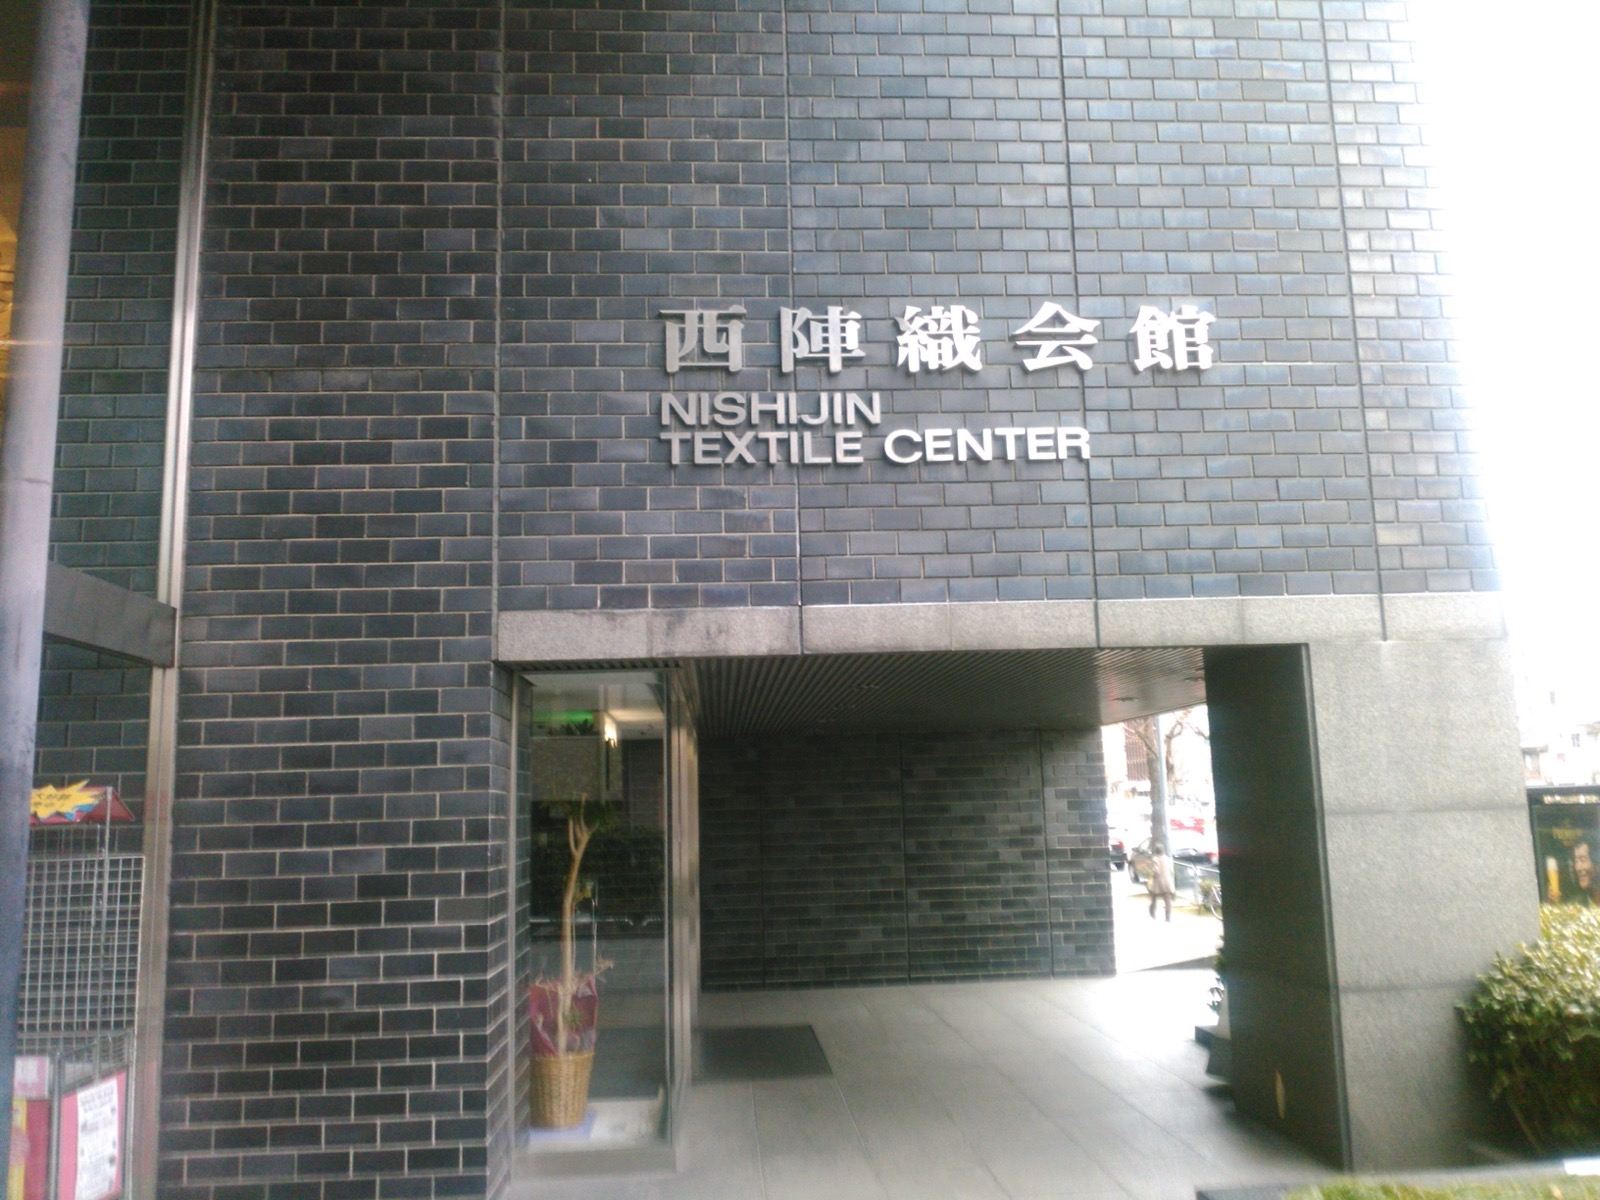 Photo of Nishijin Textile Center, Japan (西陣織会館 入口 by Lundariokn45)